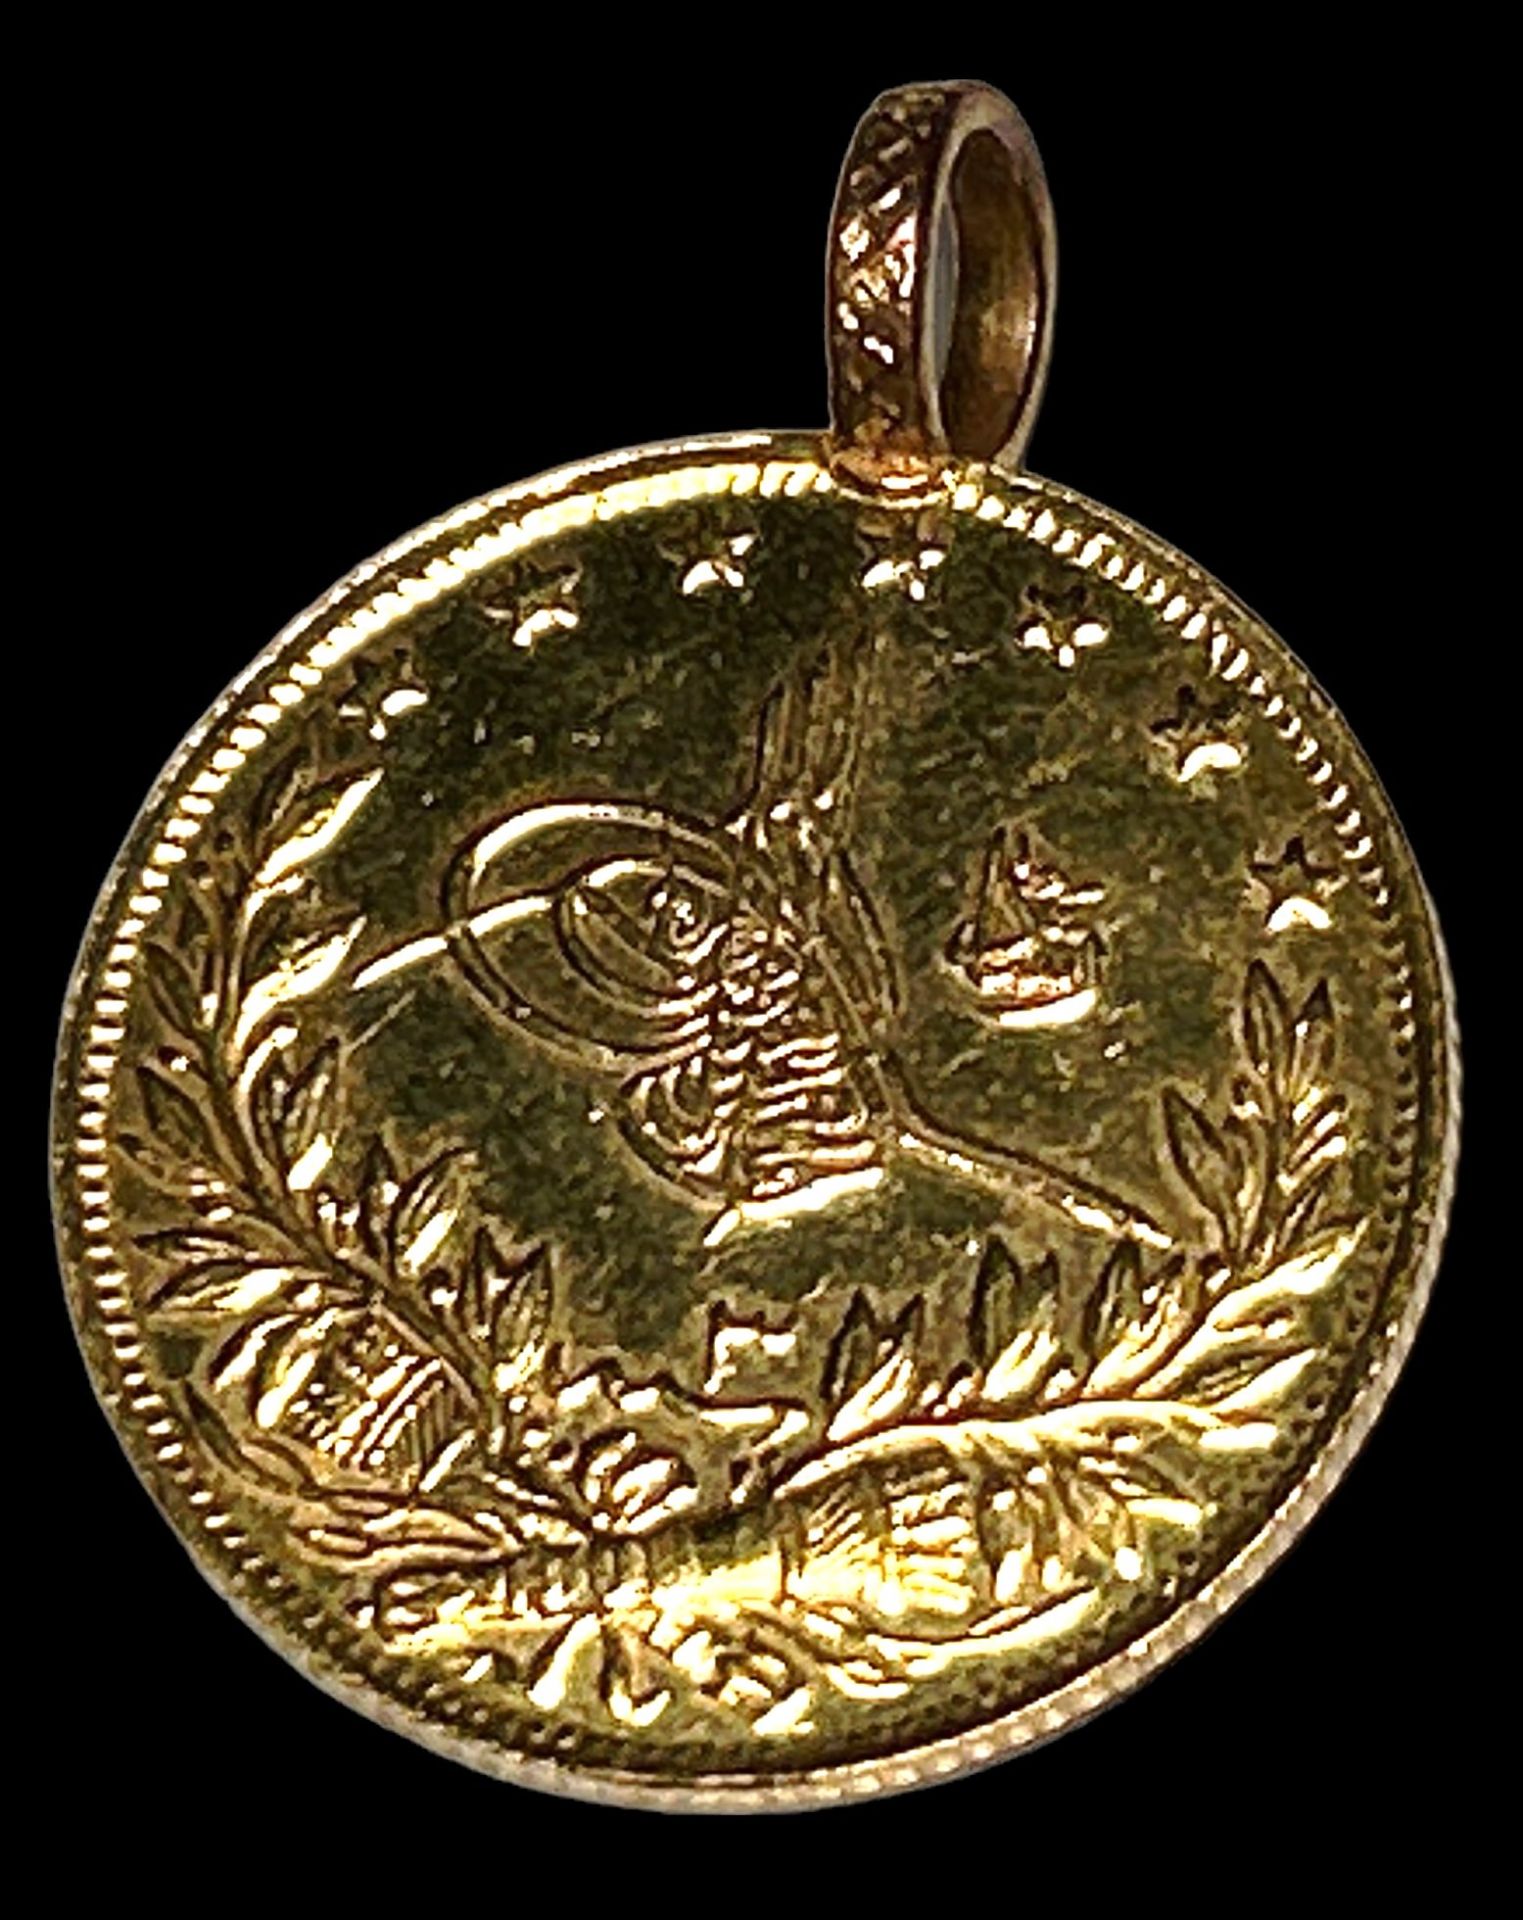 Münzanhänger Gold-916-, 100 Piaster, Türkei, gehenkelt, Öse unechtes Material, zus. 7,4 gr. D-ca. 2 - Image 2 of 5